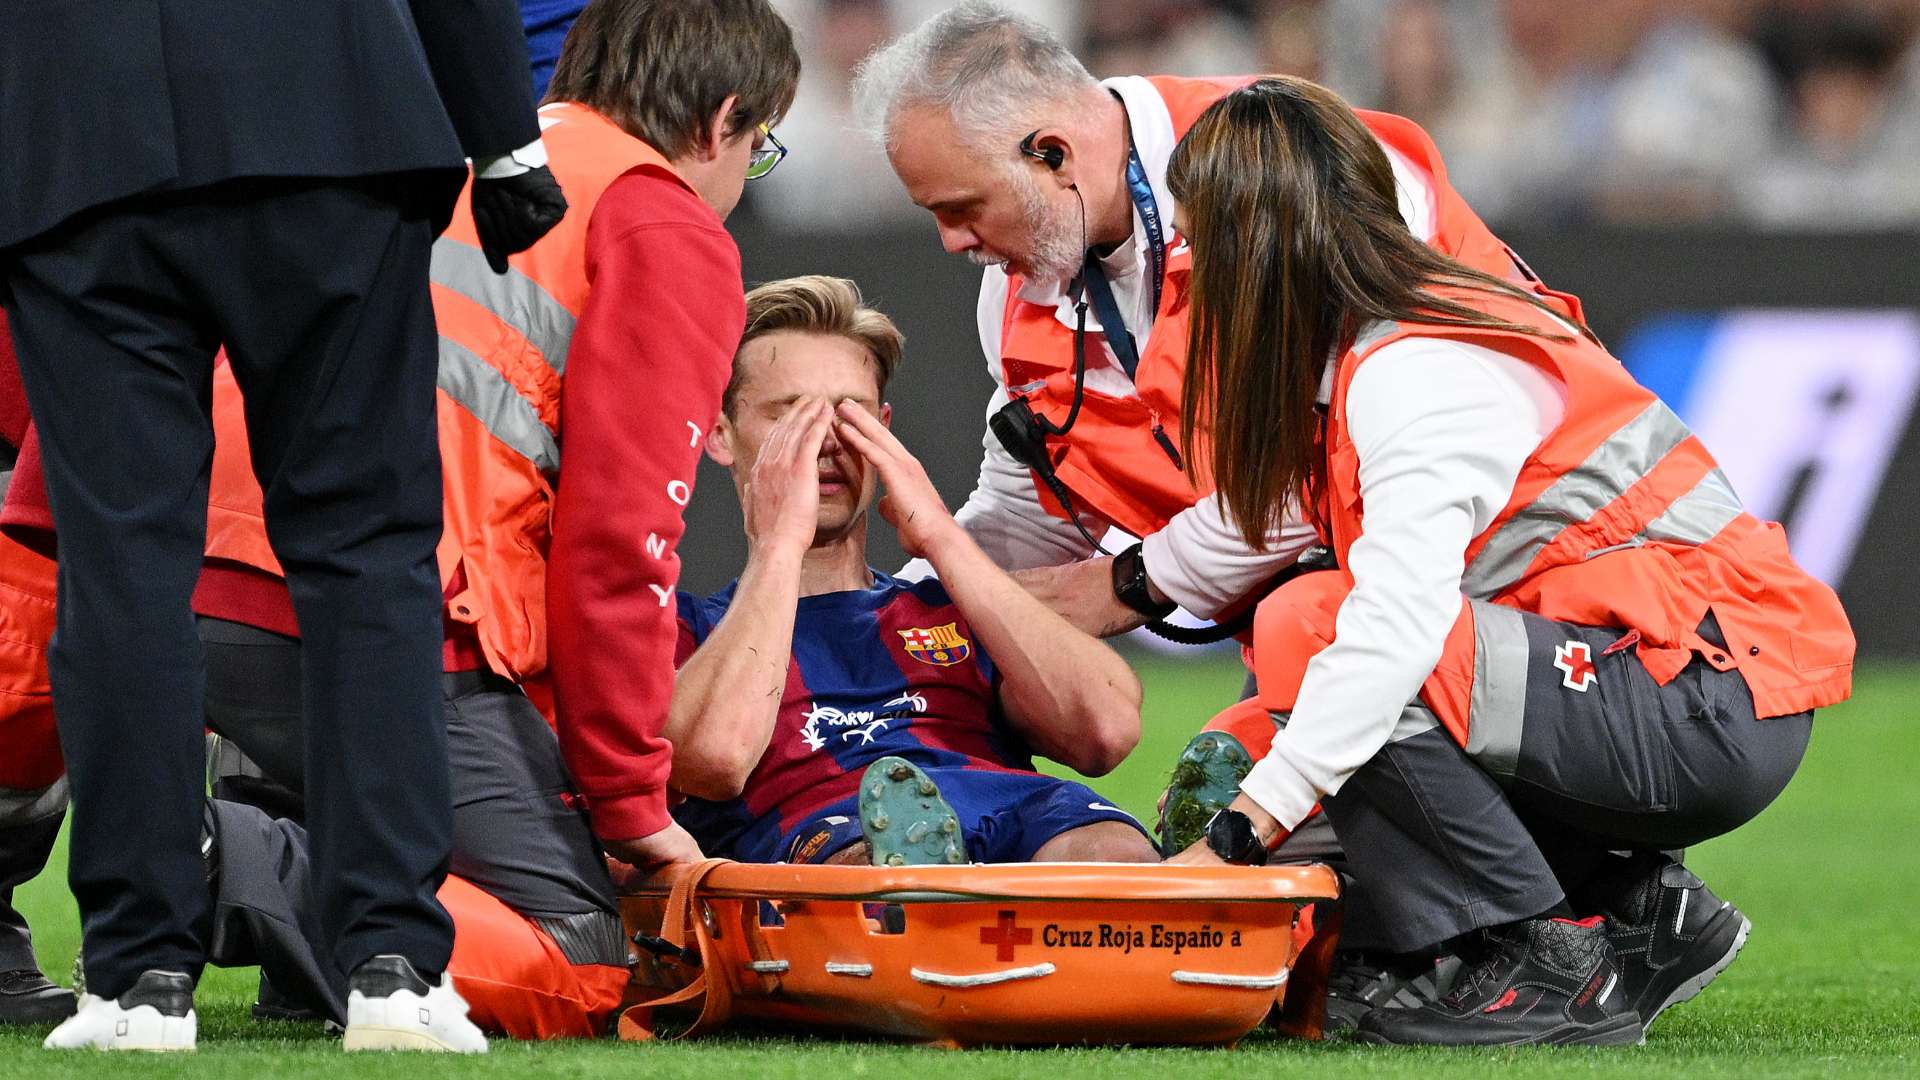 Barcelona's Frenkie de Jong goes off injured